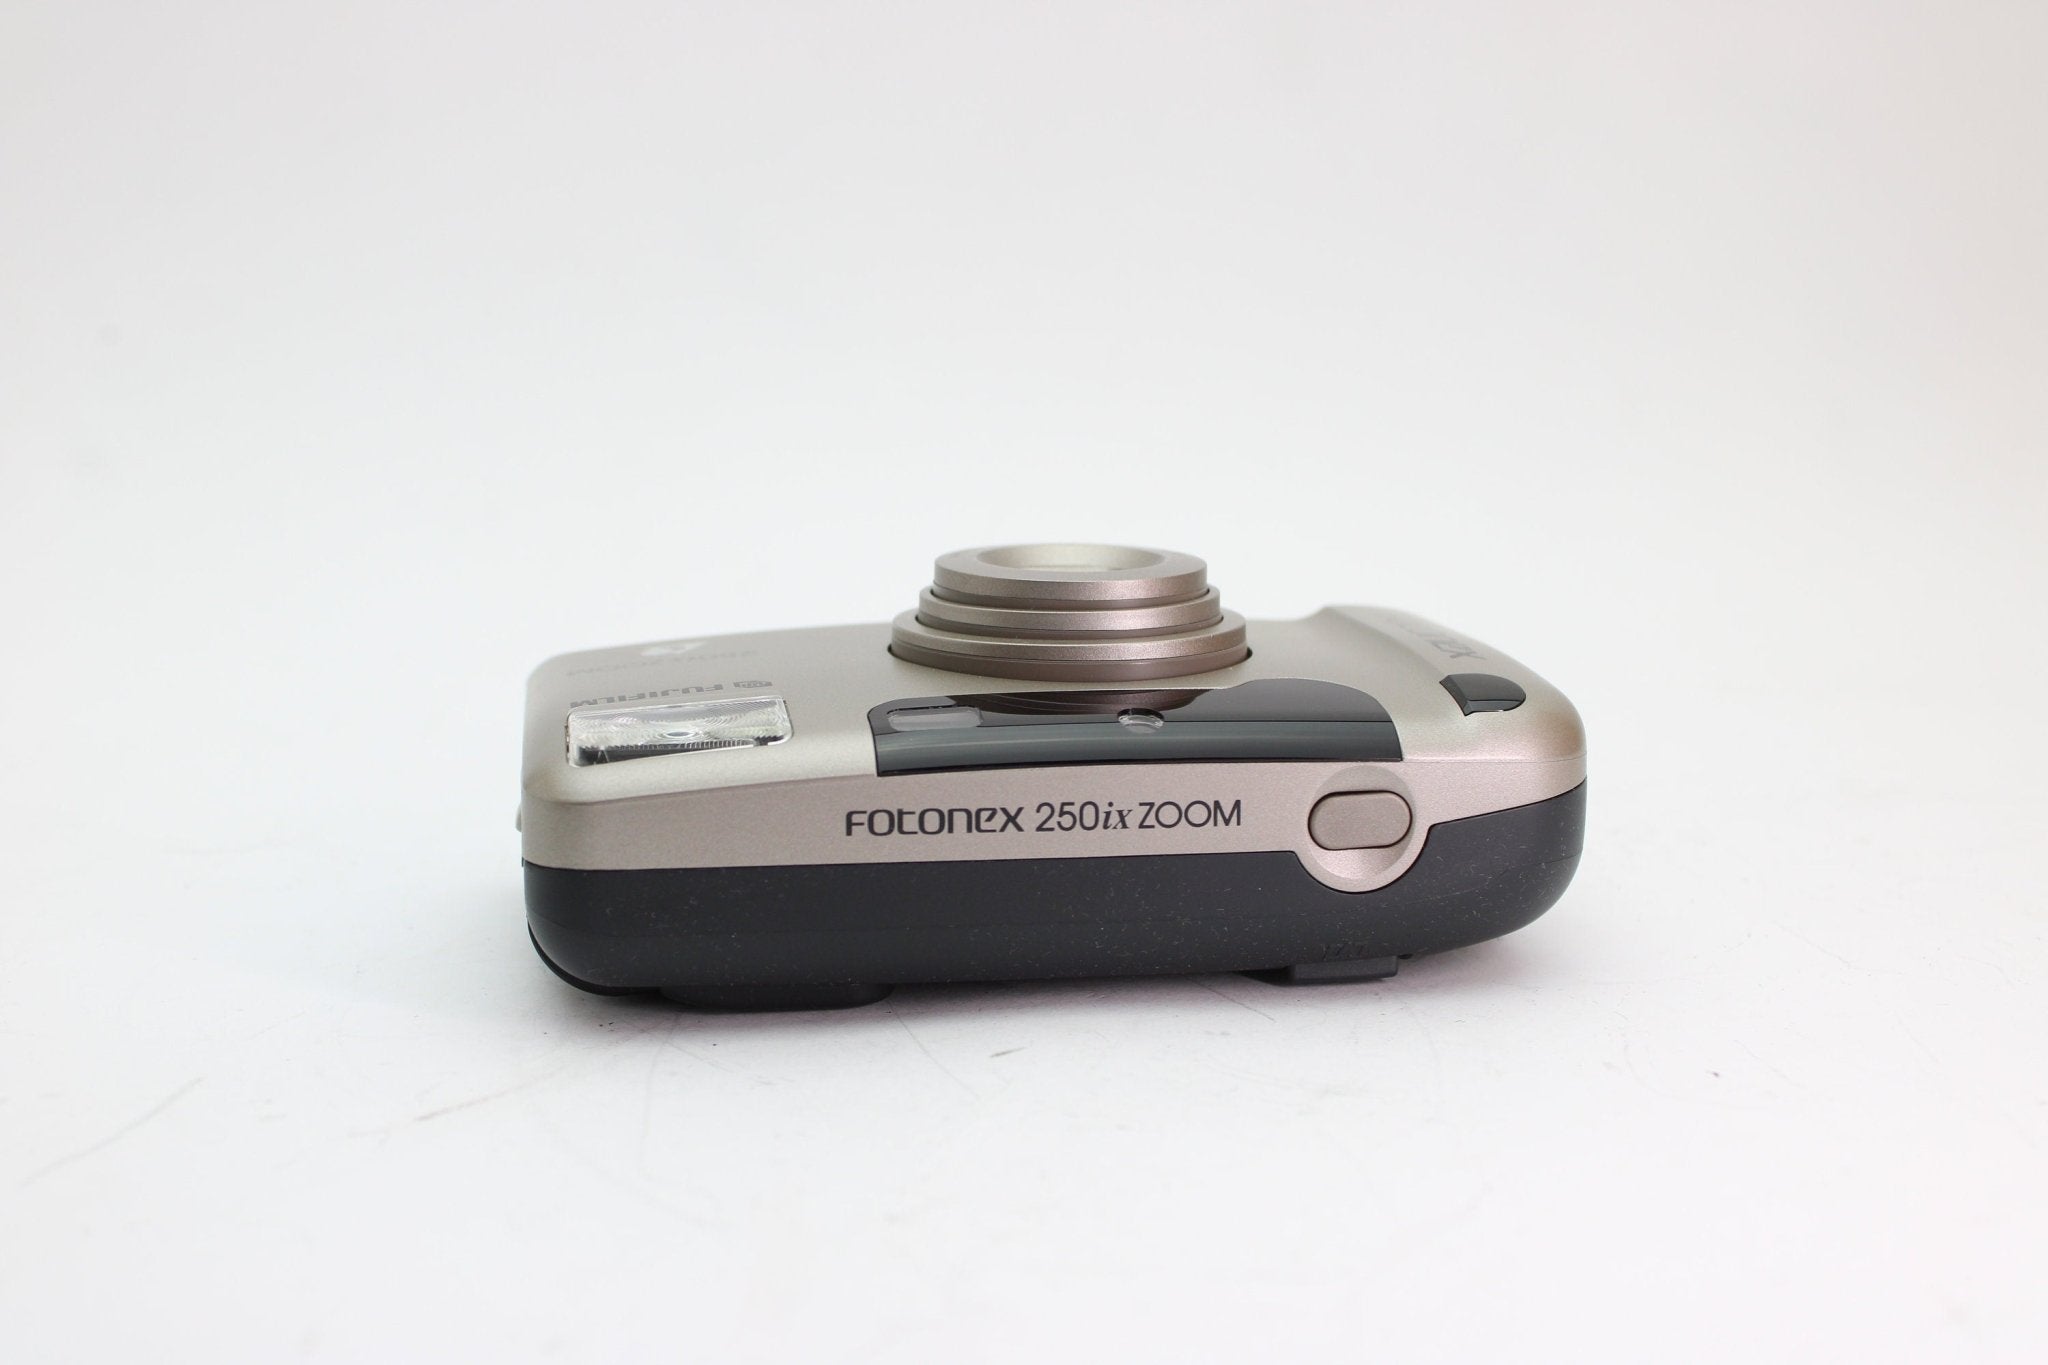 Fujifilm Fotonex 210ix Zoom - Fujifilm